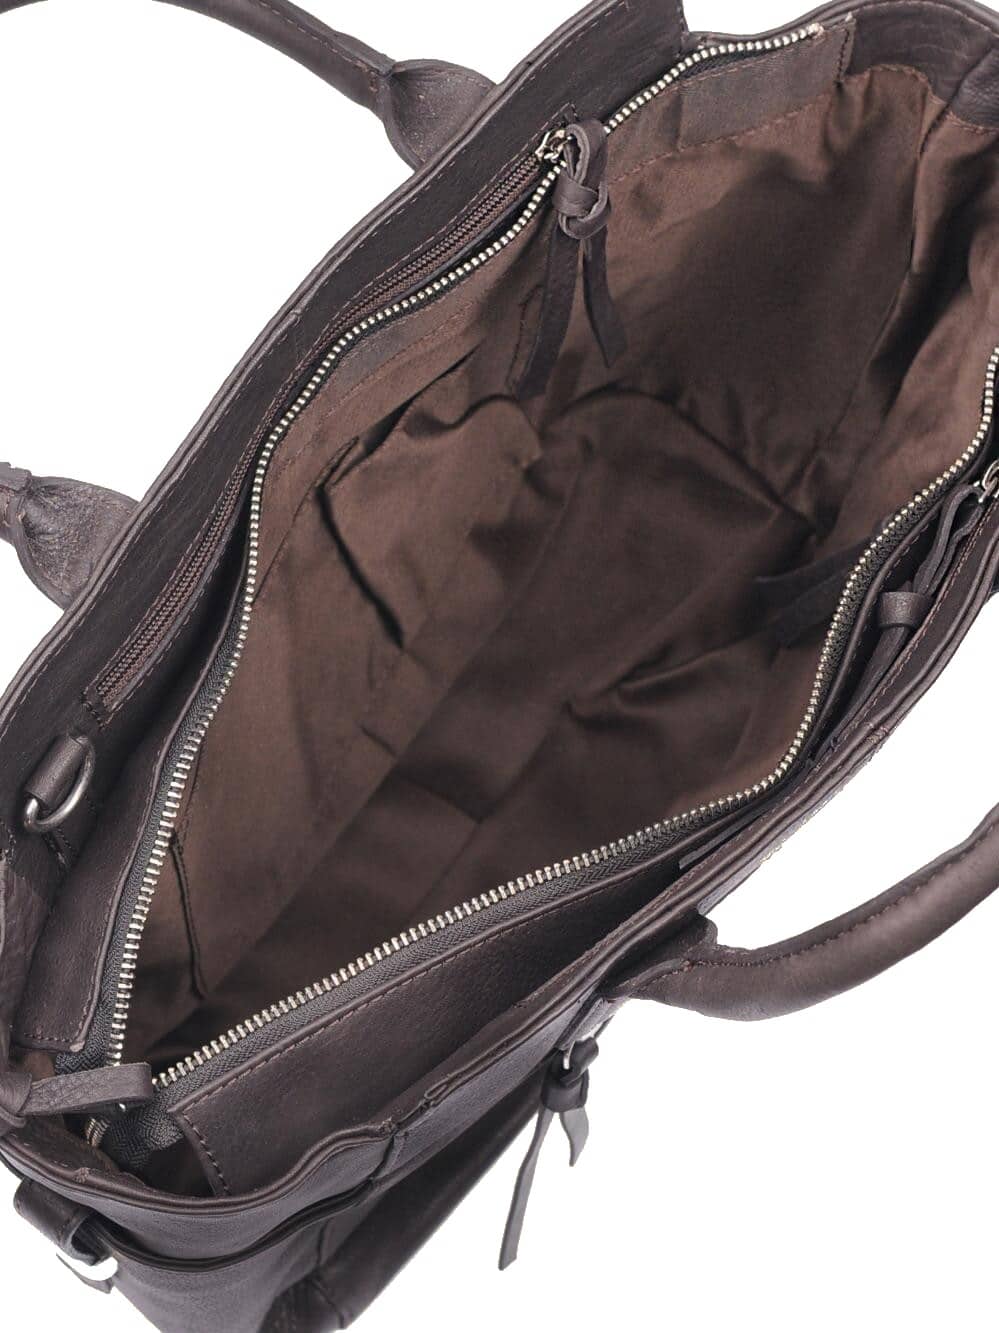 Real Leather slump Strap Bag